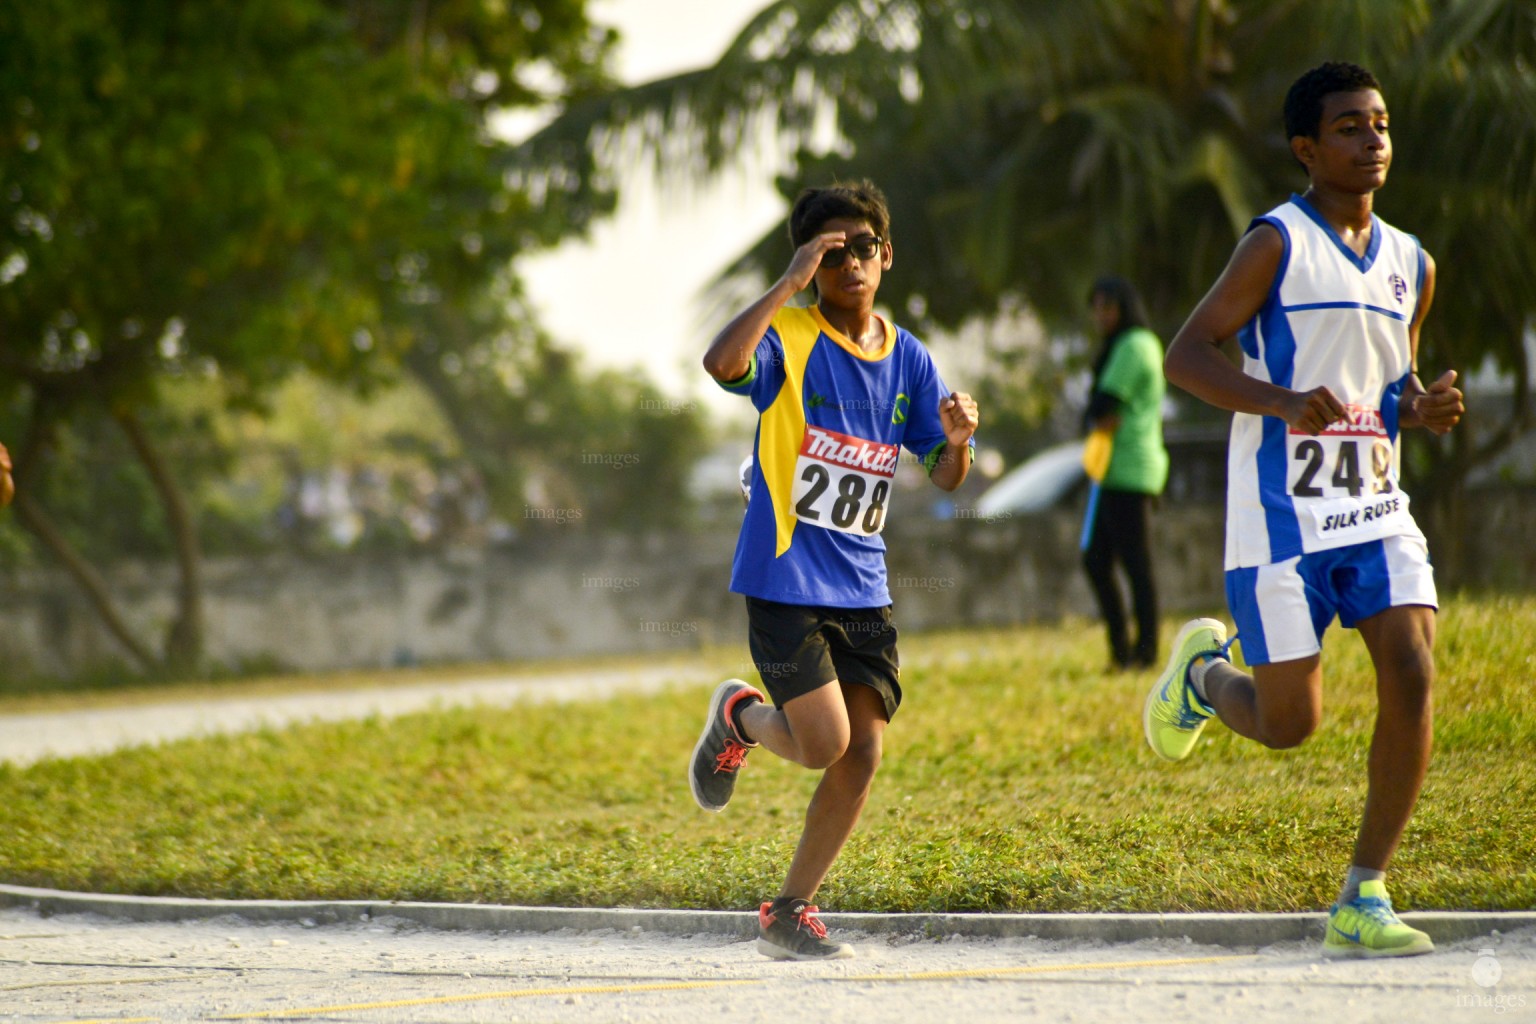 Day 3 of the Nakita Interschool Junior Championship in Kulhudhuffushi', Maldives, Wednesday, March. 23, 2016. (Images.mv Photo/Jaufar Ali).